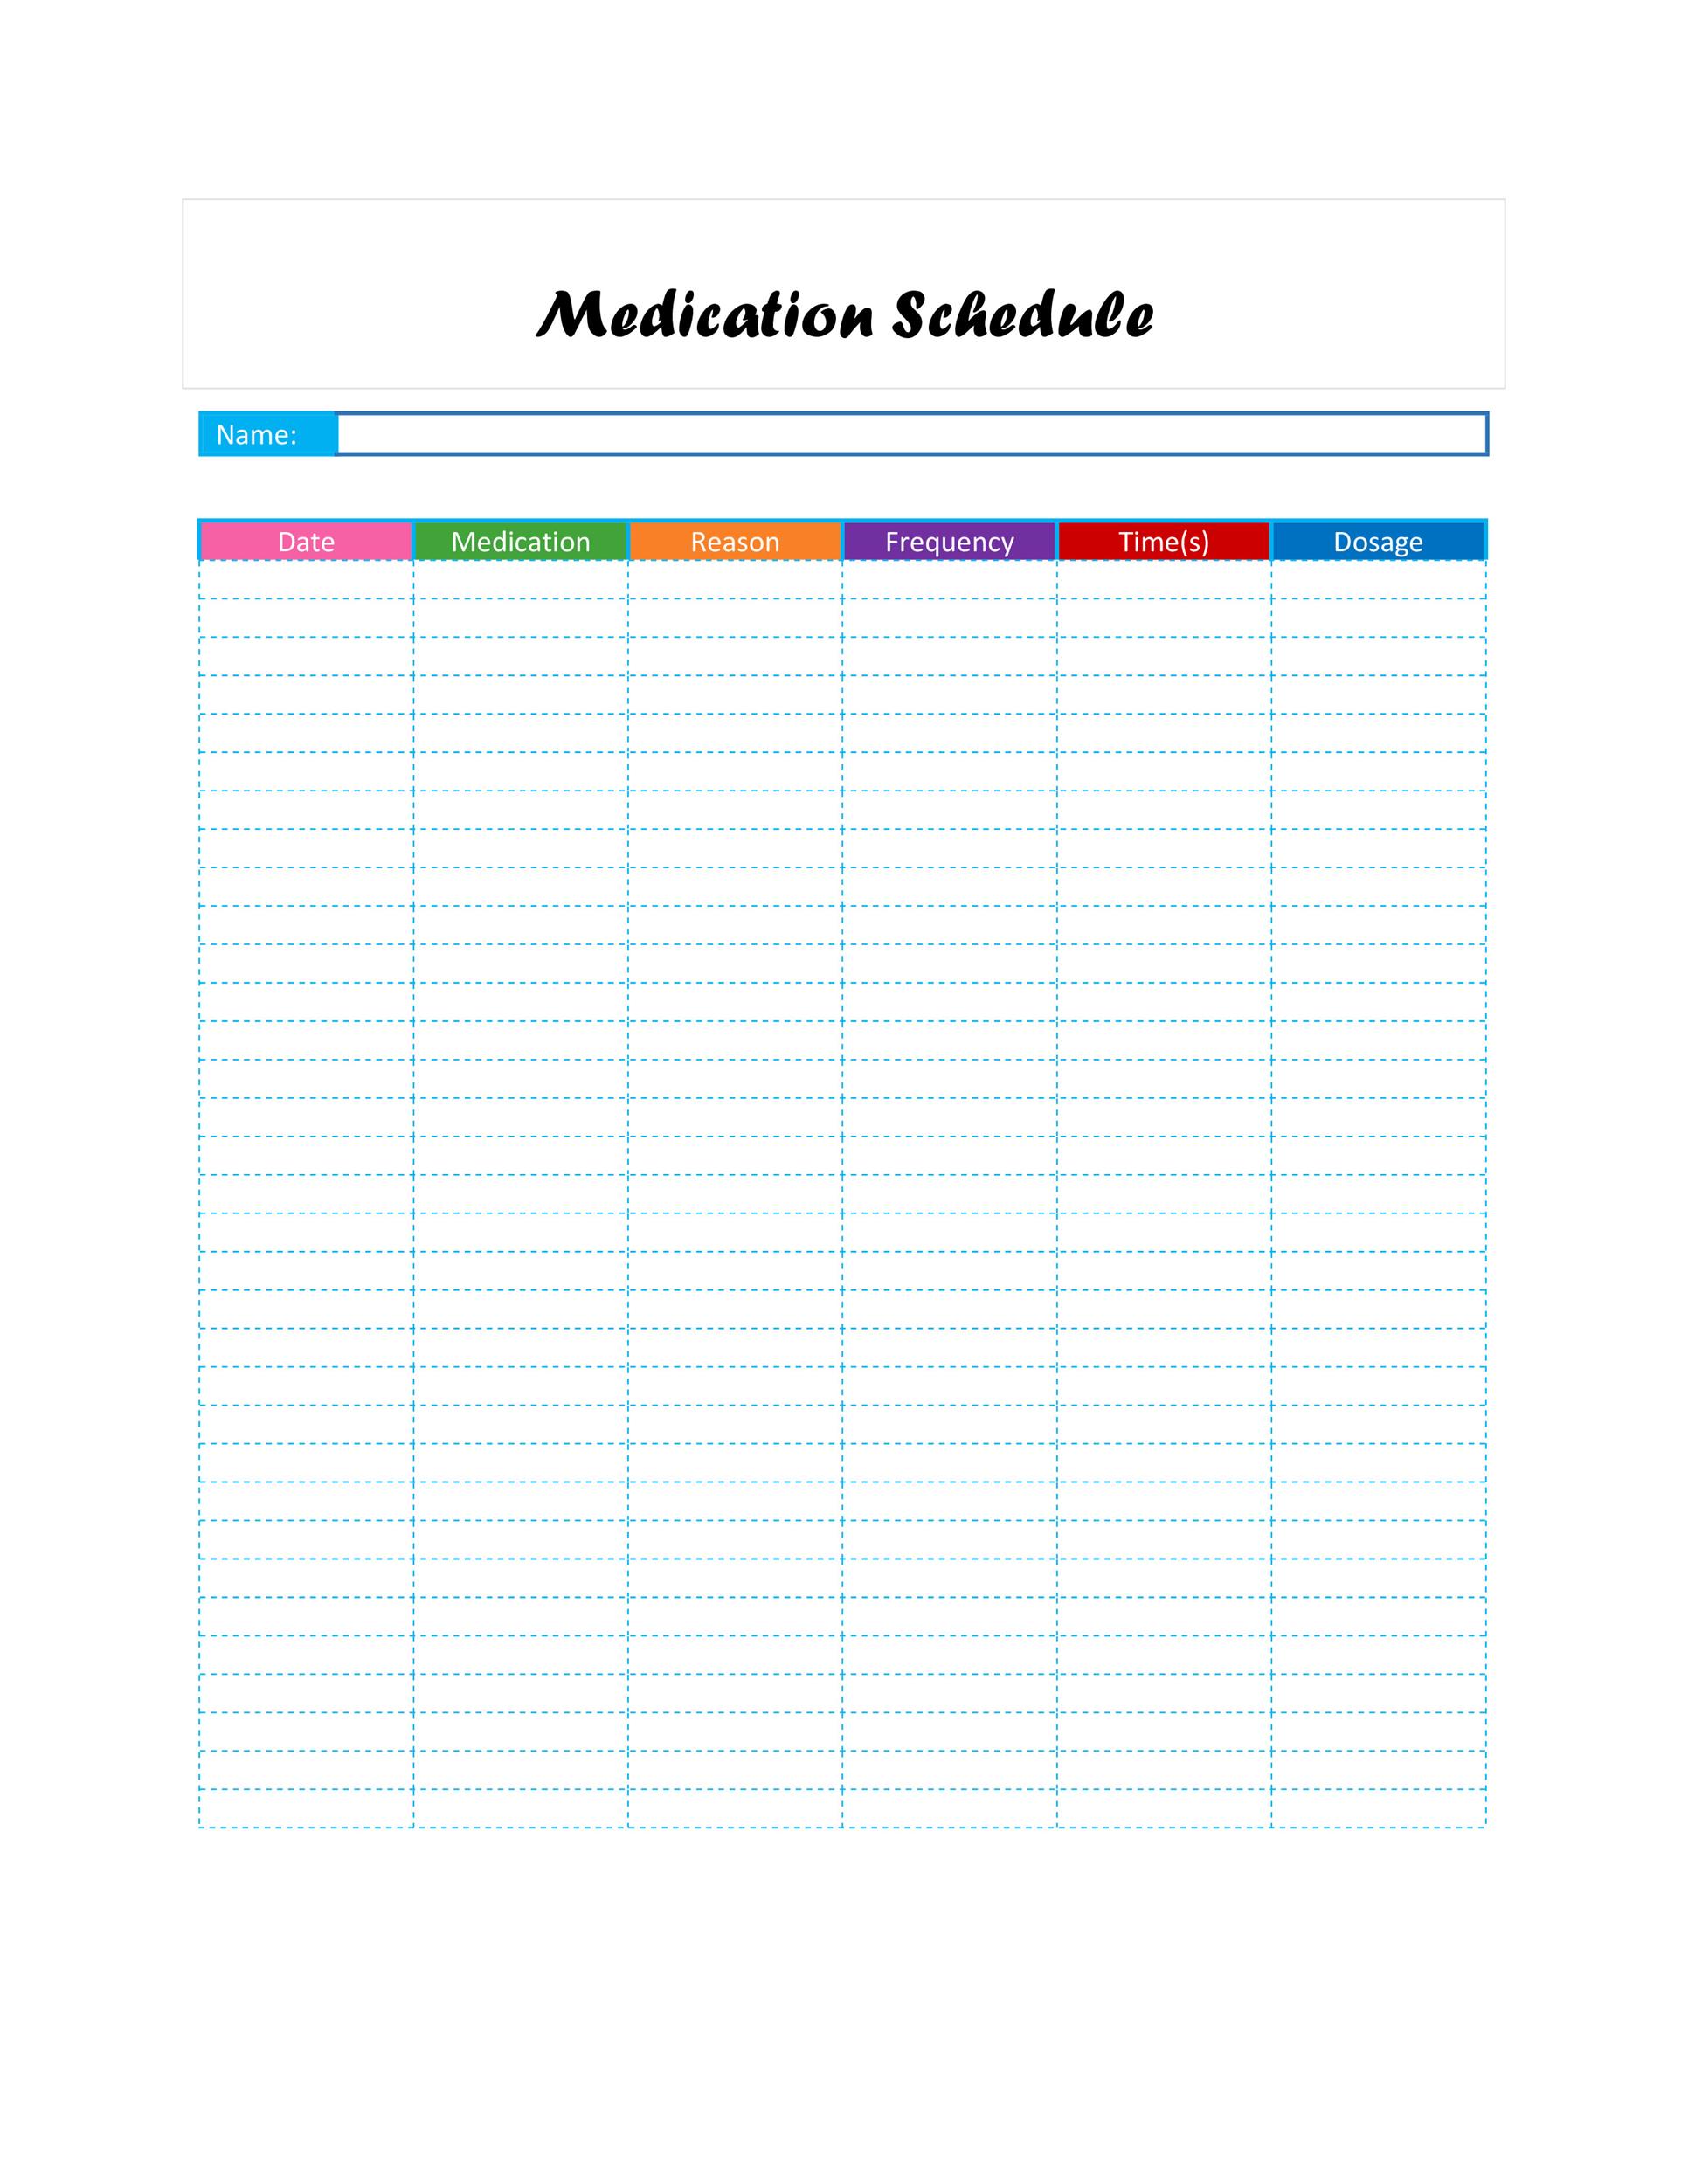 Medication Management Chart